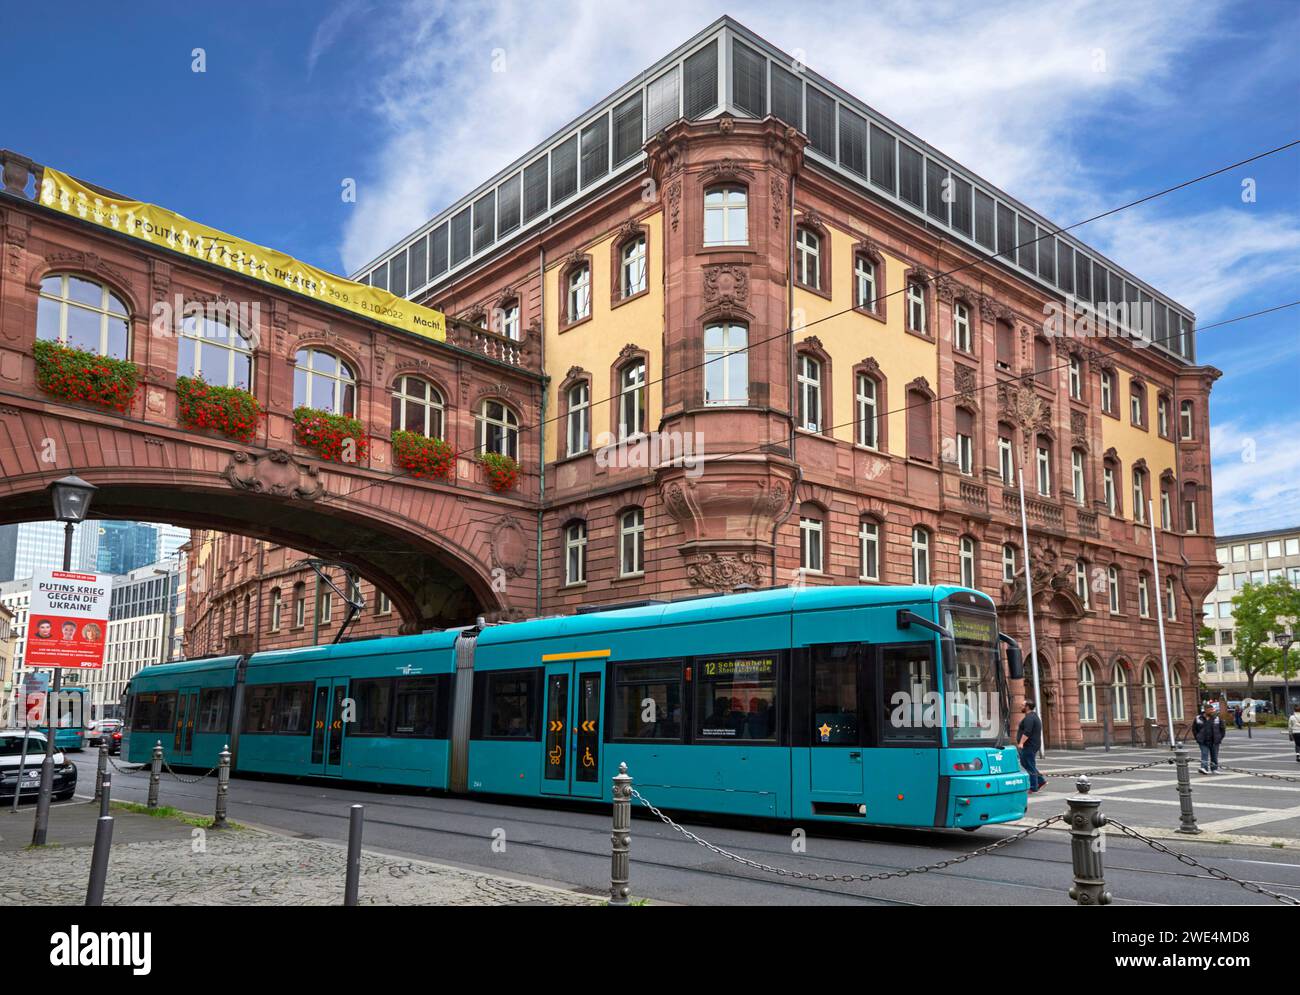 Bright city tram in the center of Frankfurt, Germany Stock Photo